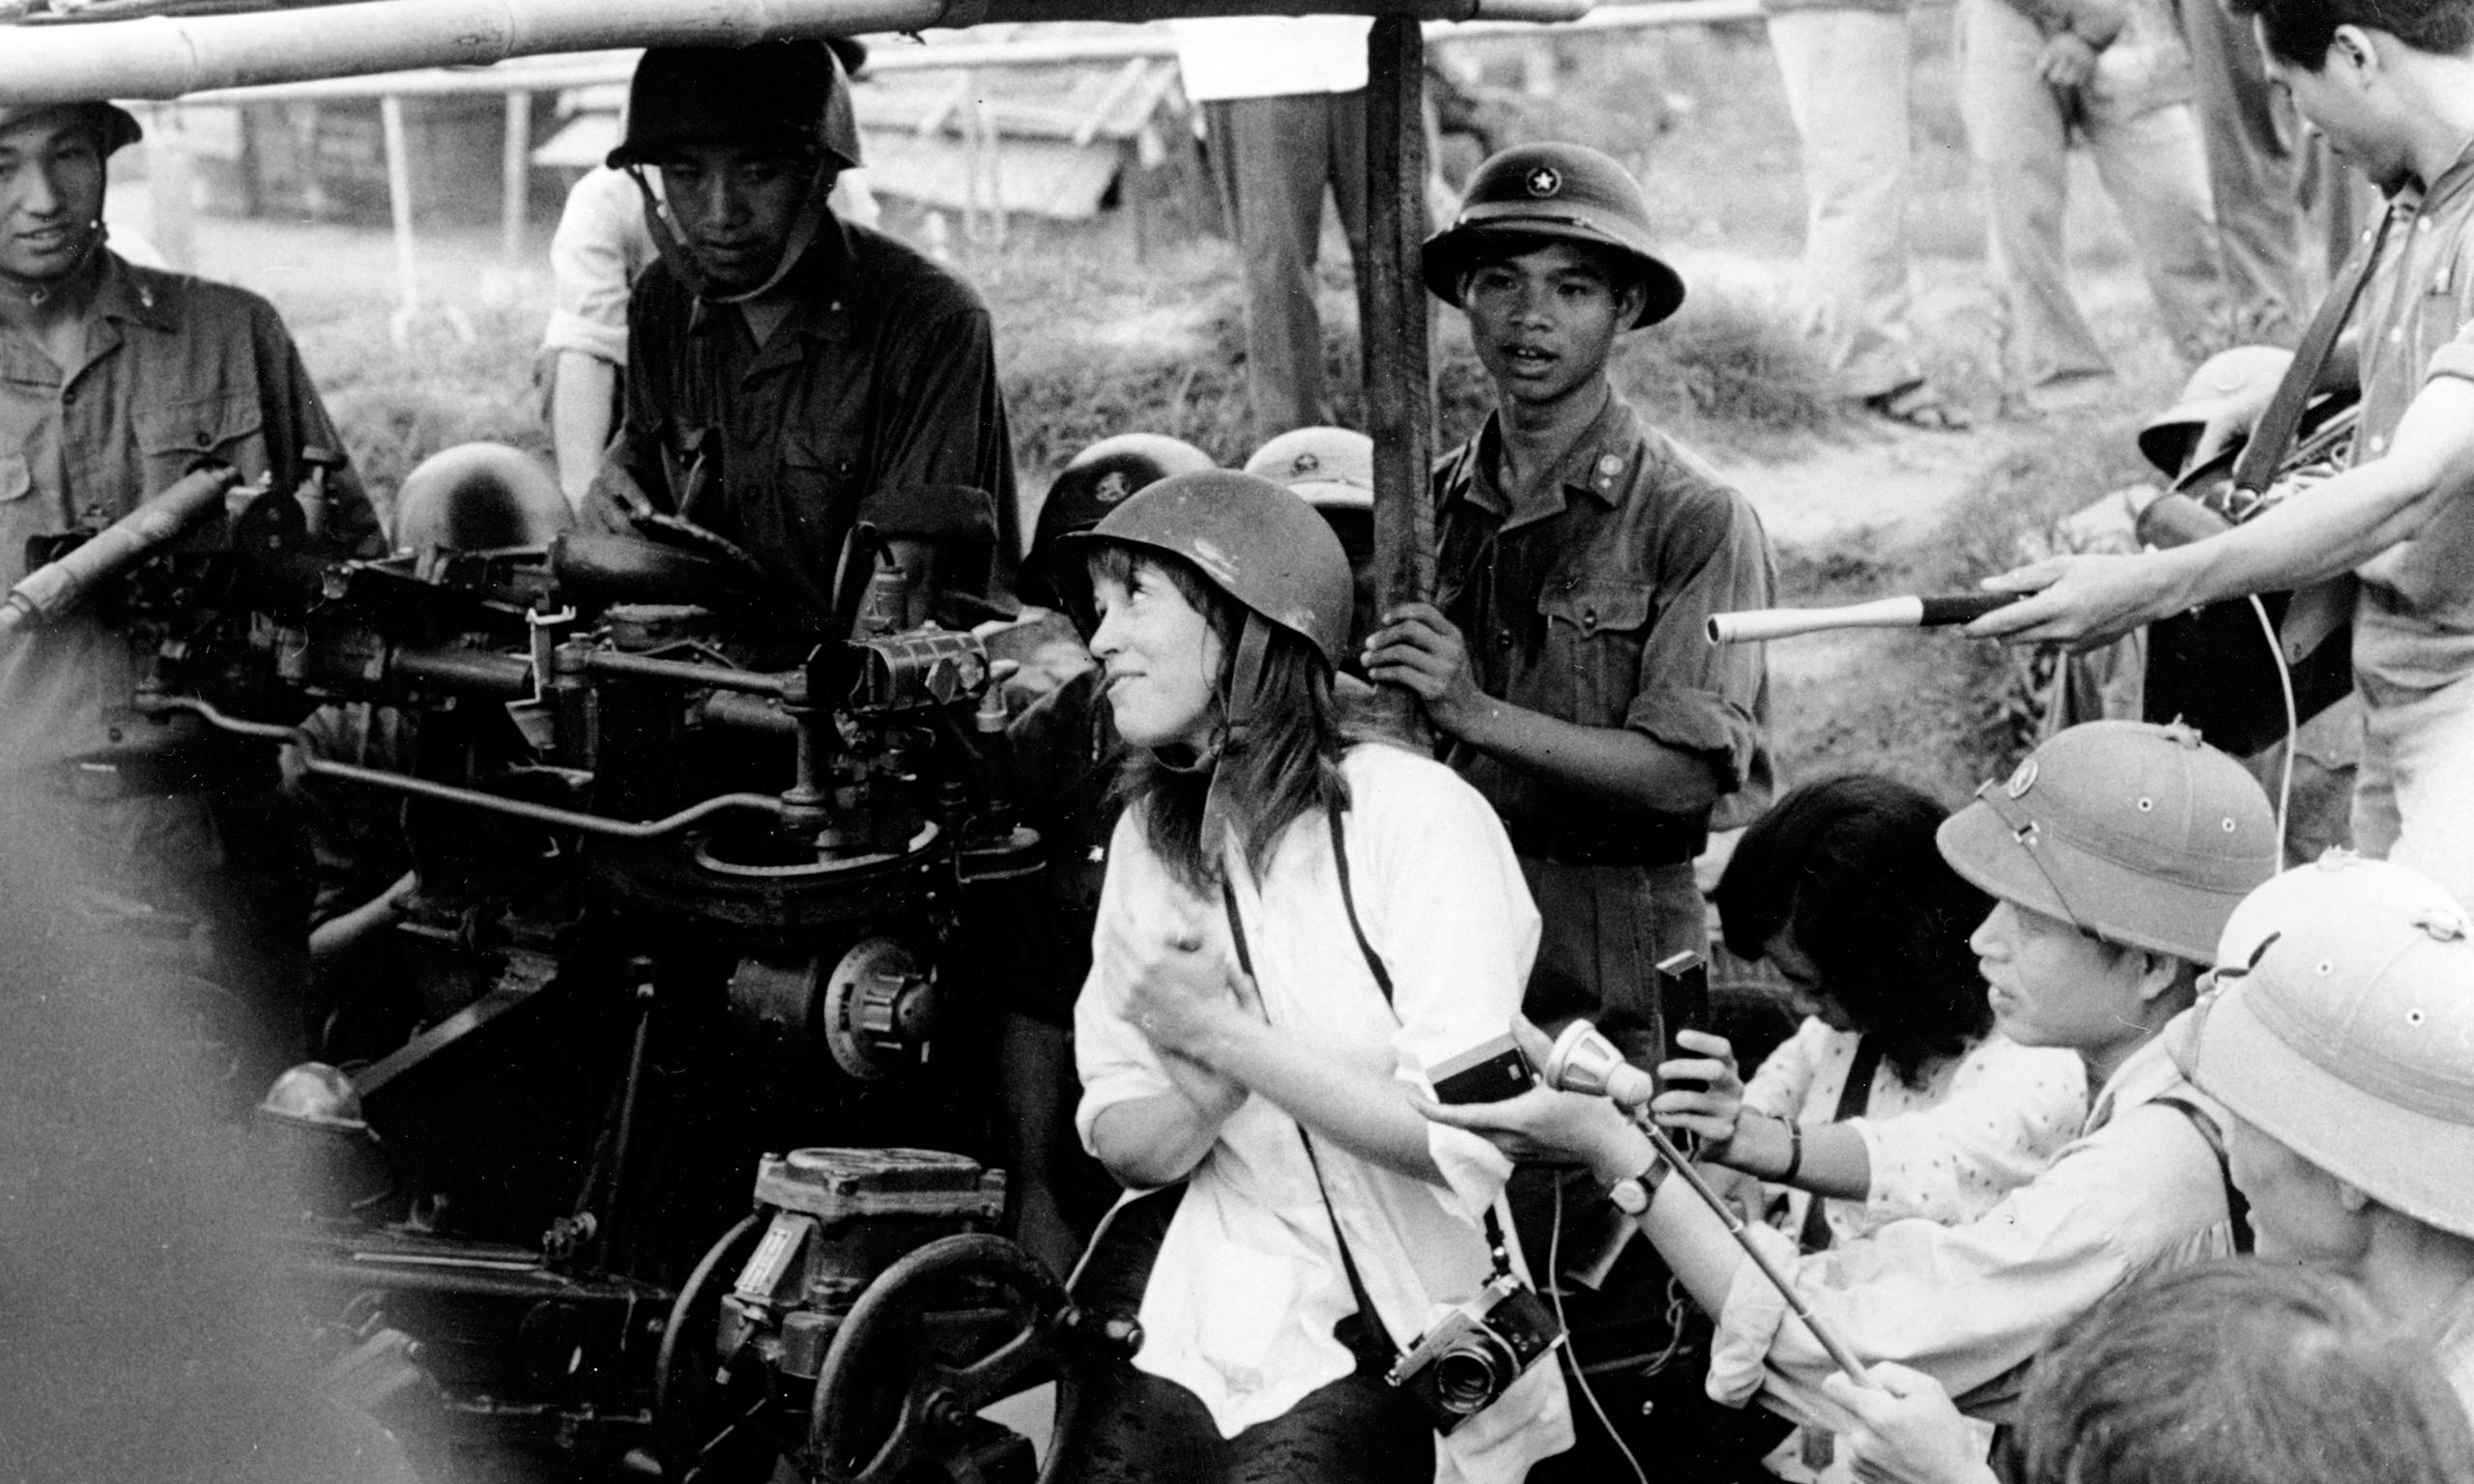 Jane Fonda speaks to soldiers at a park in Vietnam in 1972. | Source: Flickr.